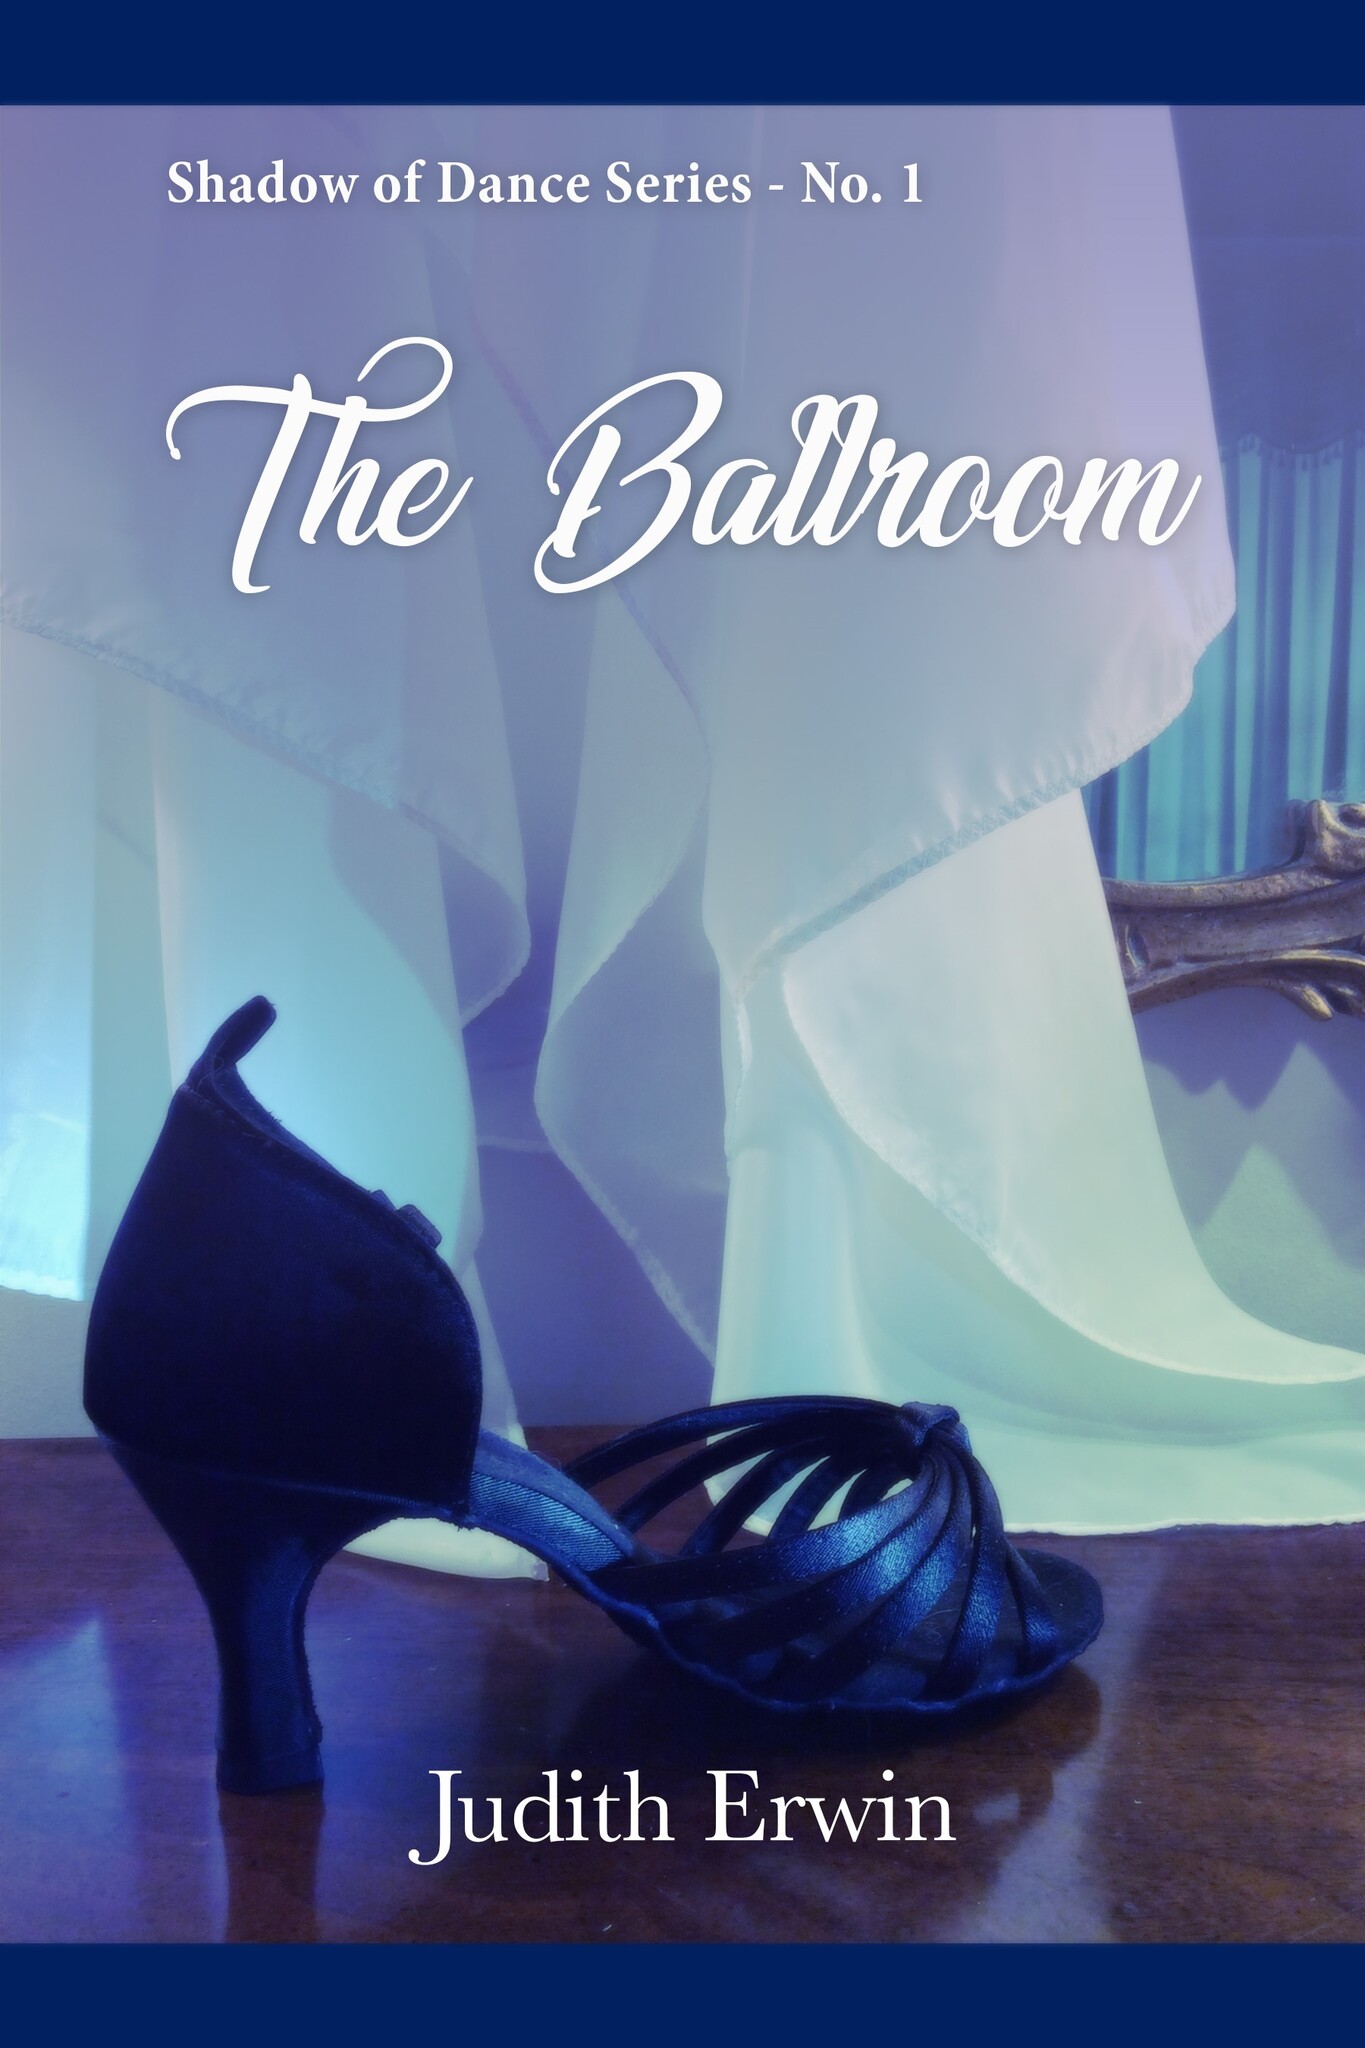 Cover art for author Judith Erwin's "The Ballroom"